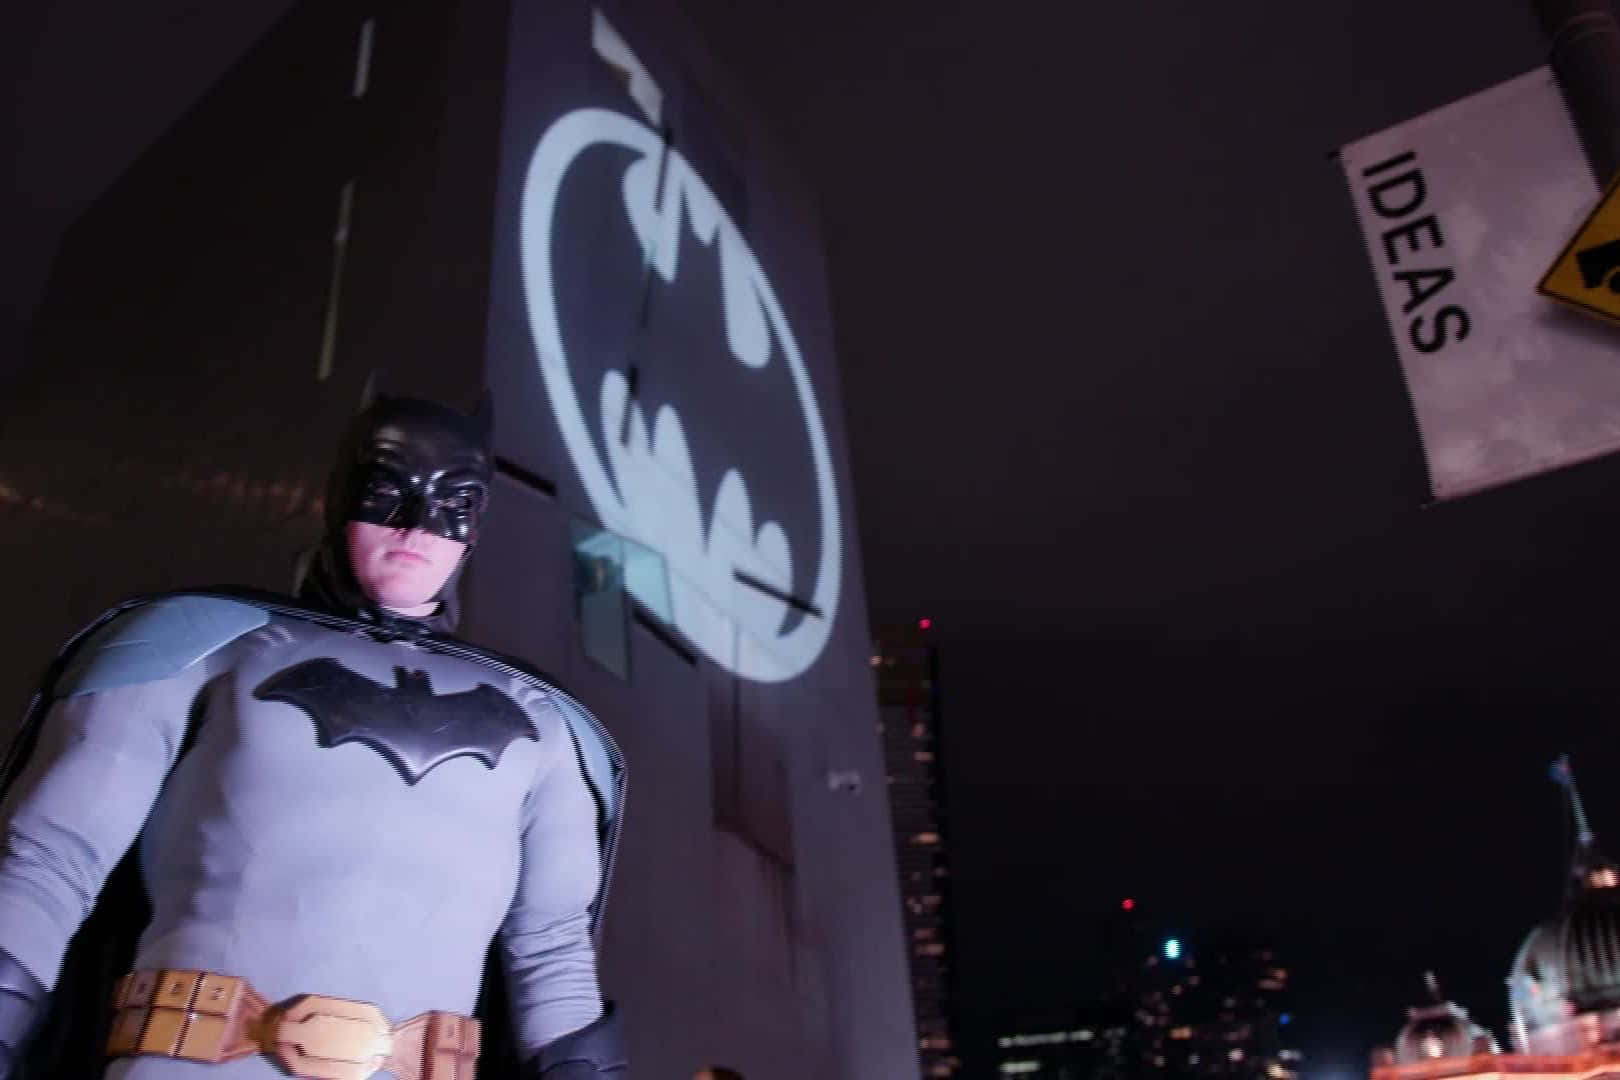 The Iconic Bat Signal Lighting Up The Night Sky